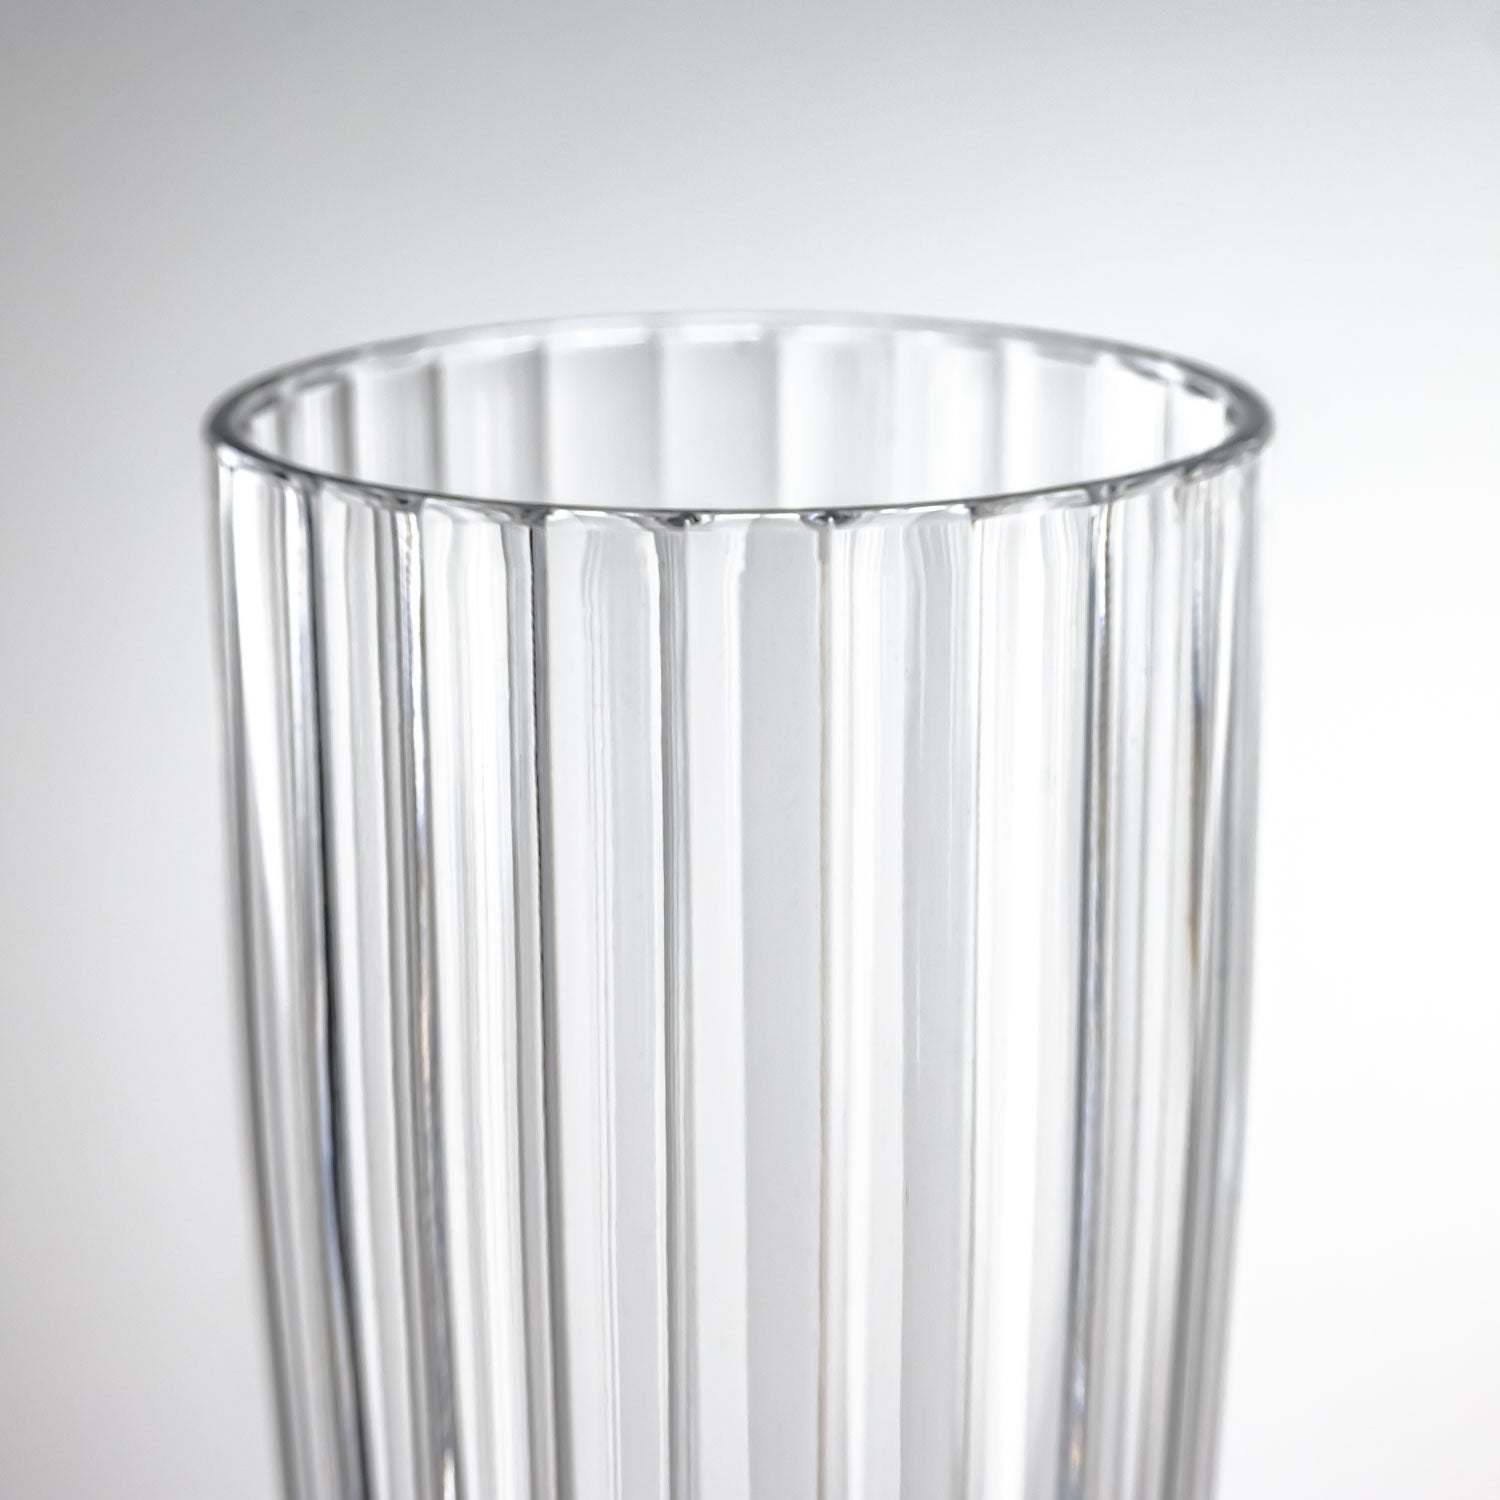 Merritt Designs Imperial Clear 18oz Acrylic Float Drinkware